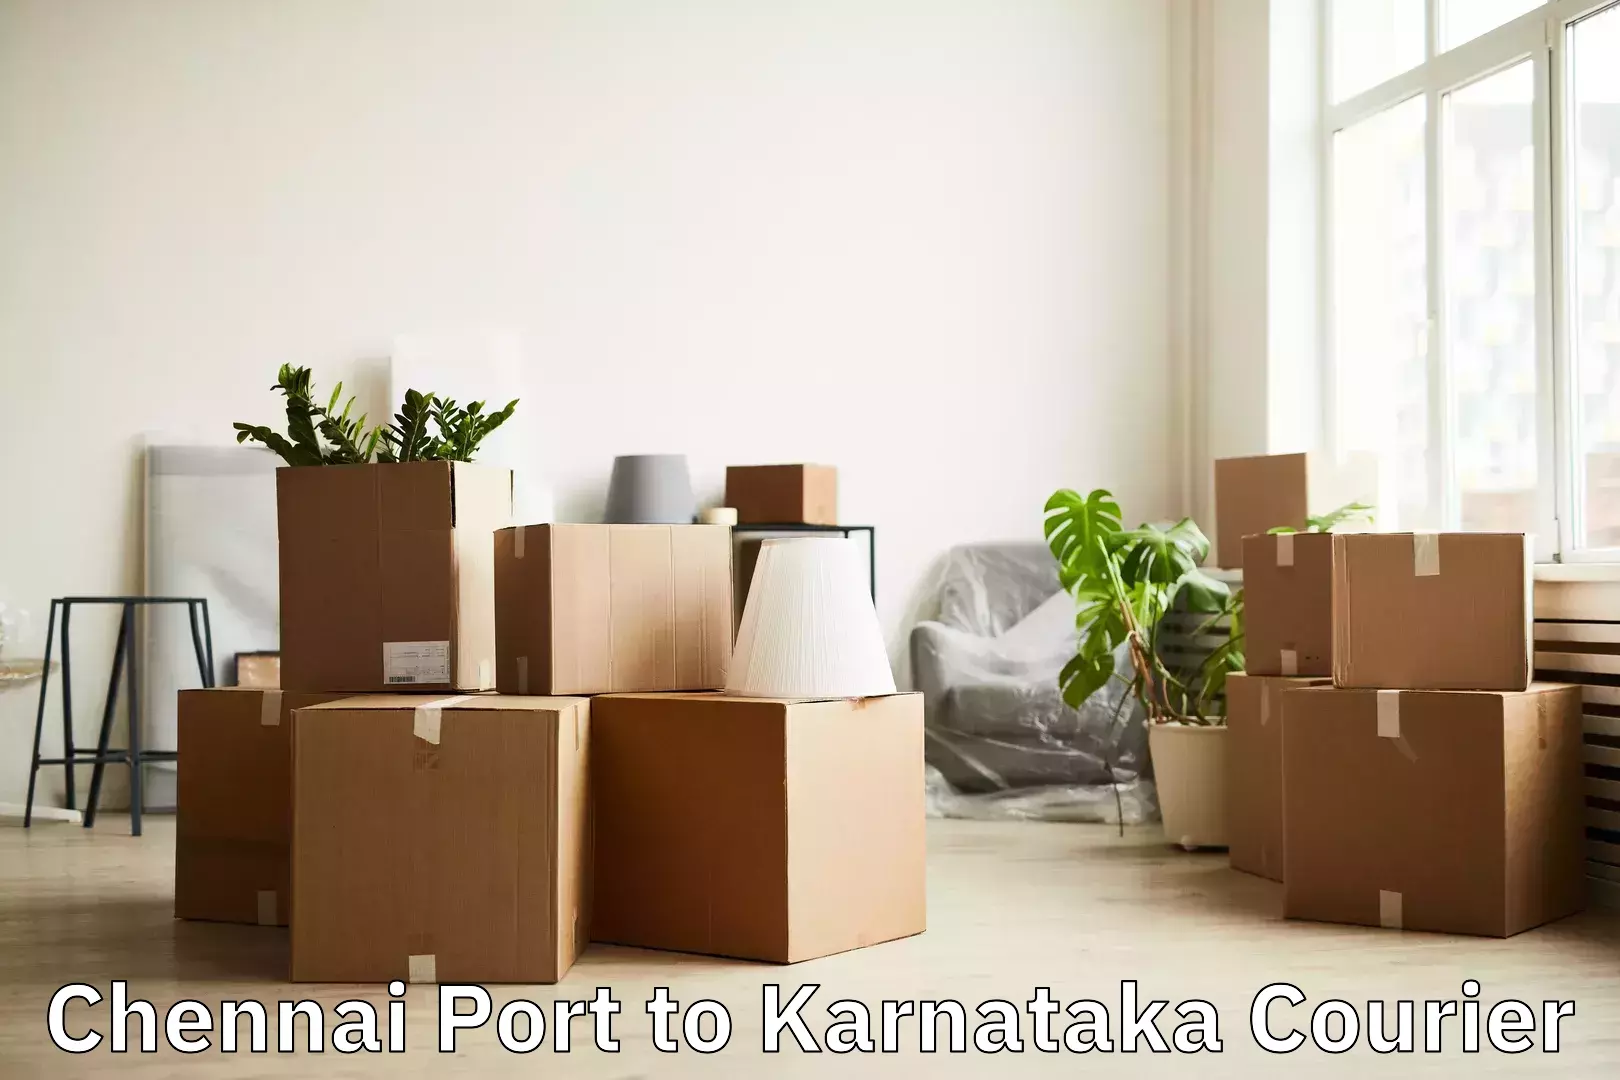 Luggage transport consultancy Chennai Port to Gonikoppal